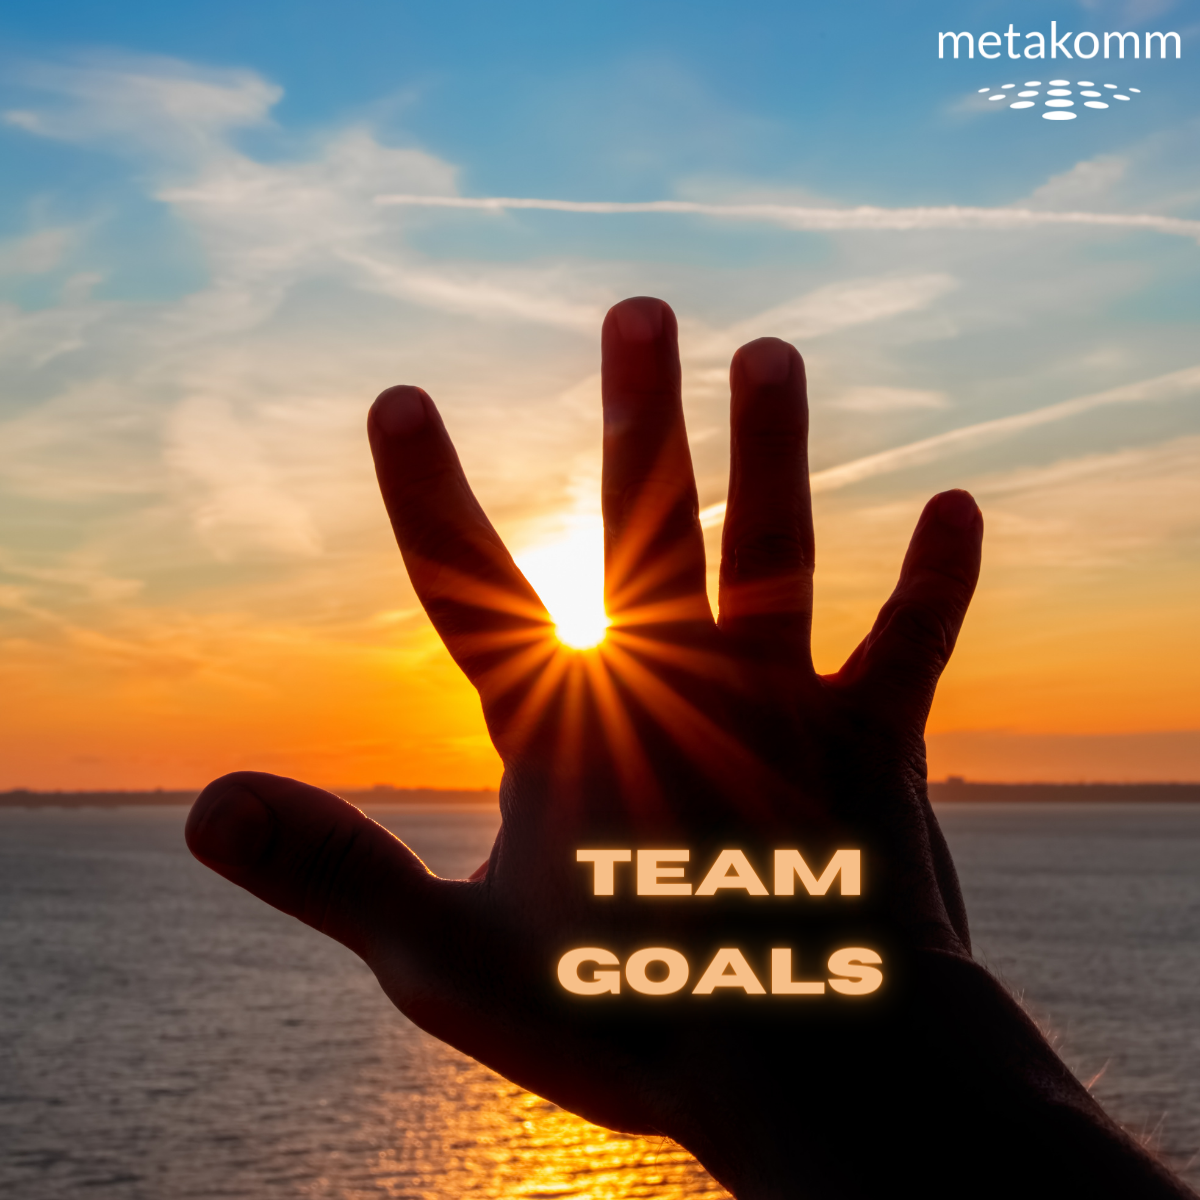 Metakomm Blog Article Team Goals